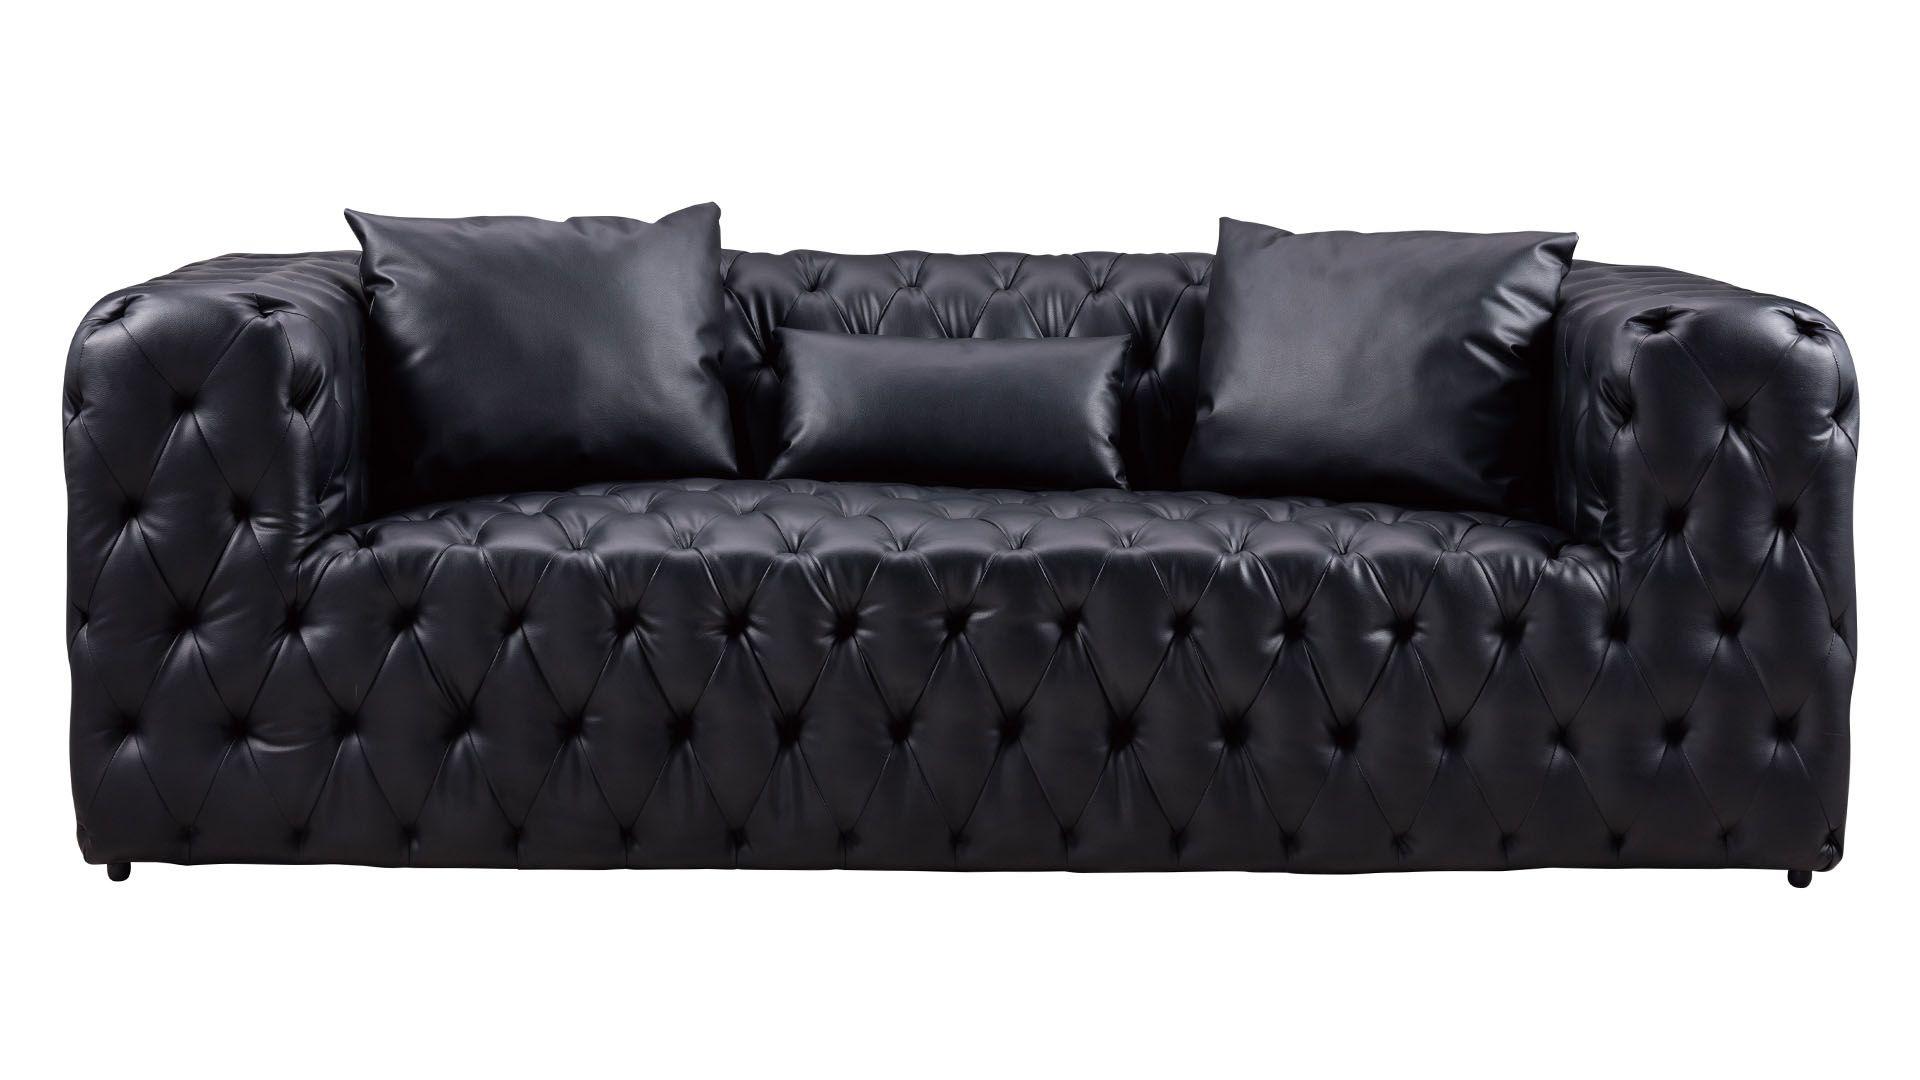 Contemporary, Modern Sofa AE-D821-BK AE-D821-BK-SF in Black Bonded Leather